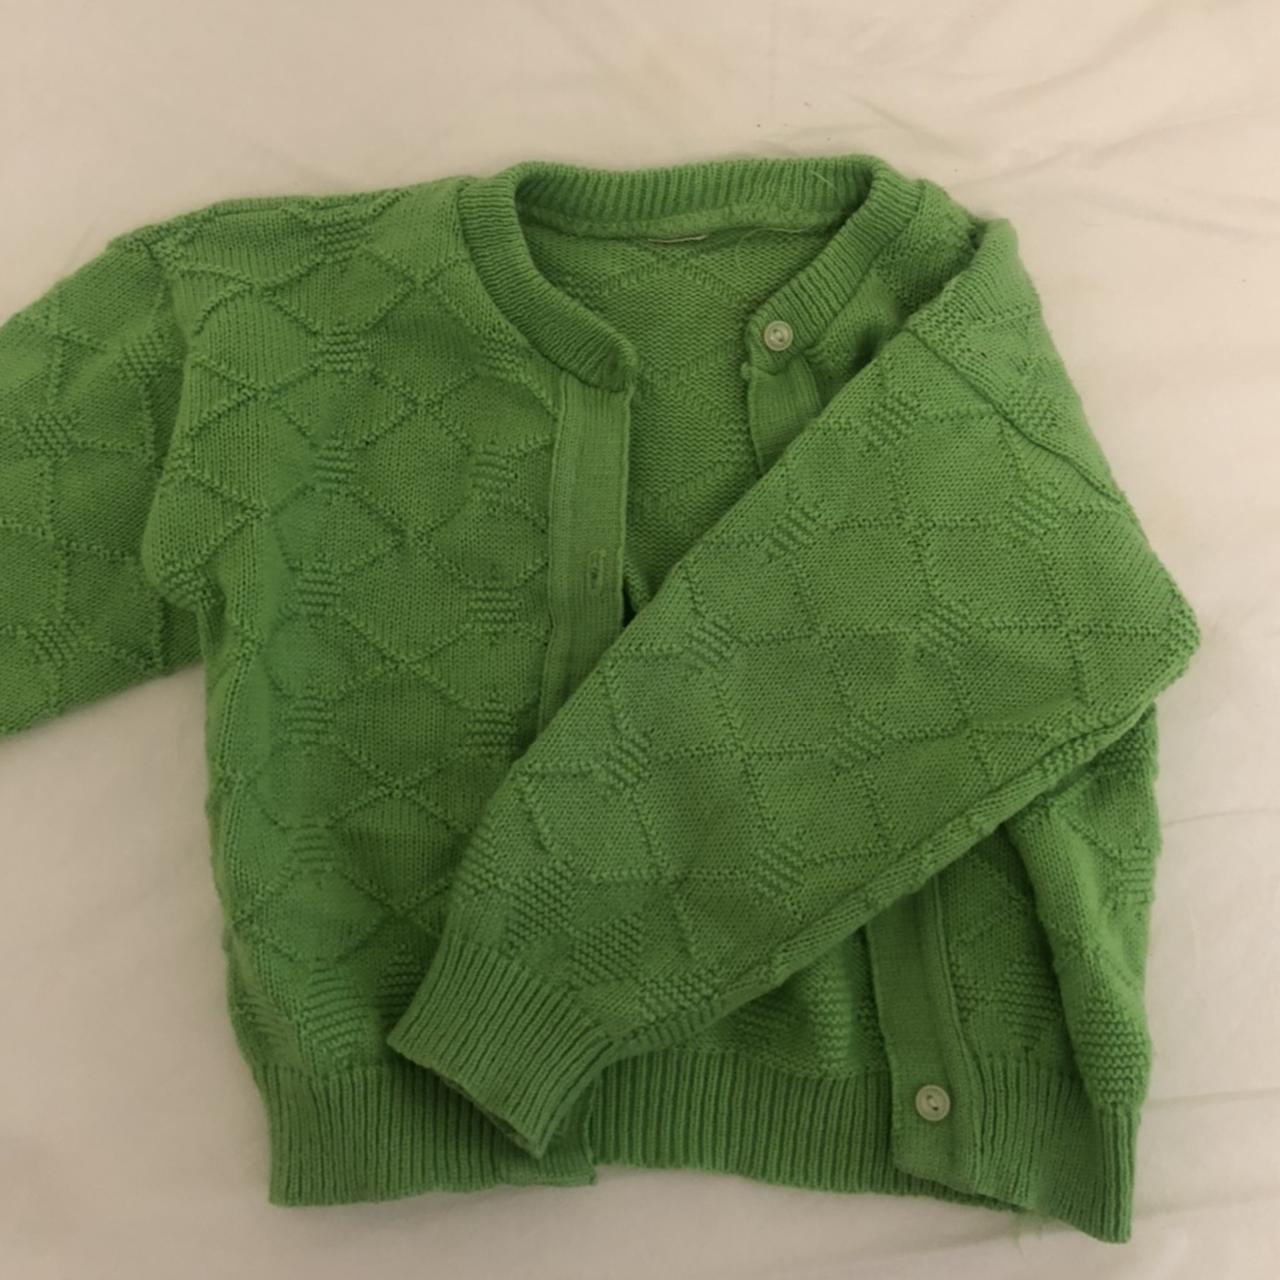 Little lime green knit cardigan from vintage shop in... - Depop